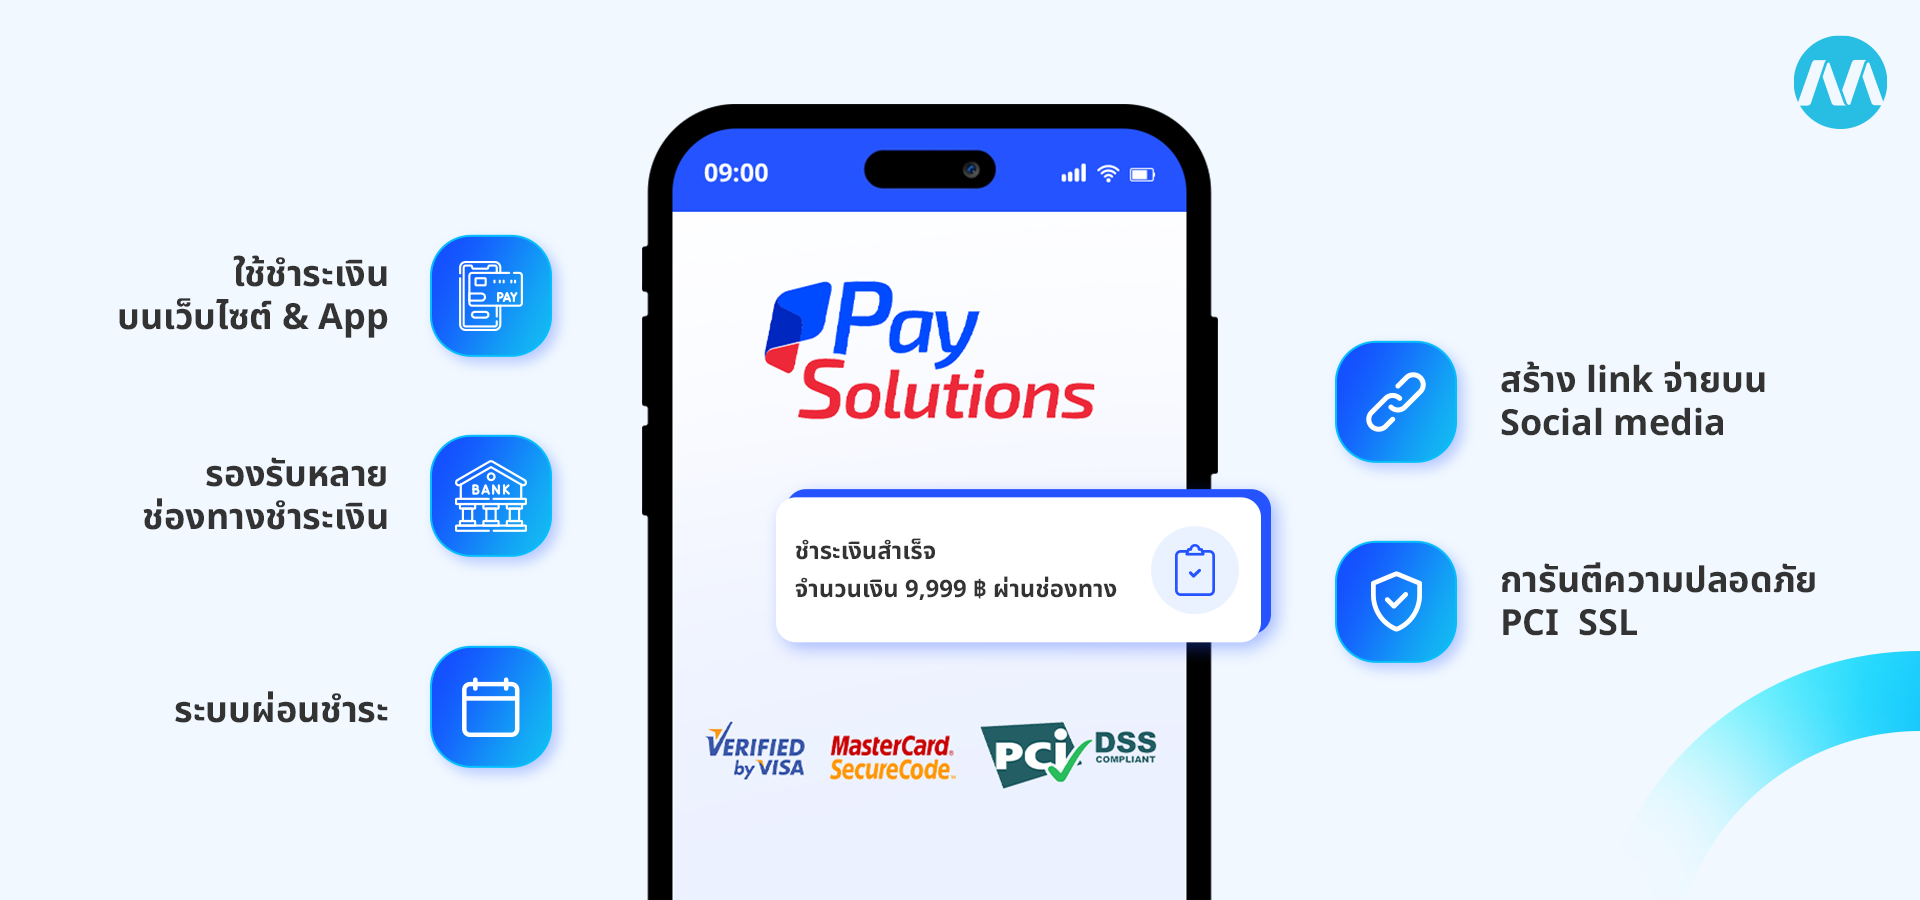 Pay Solutions เป็นผู้ให้บริการระบบชำระเงินออนไลน์ (Payment Gateway) แห่งแรกของไทย